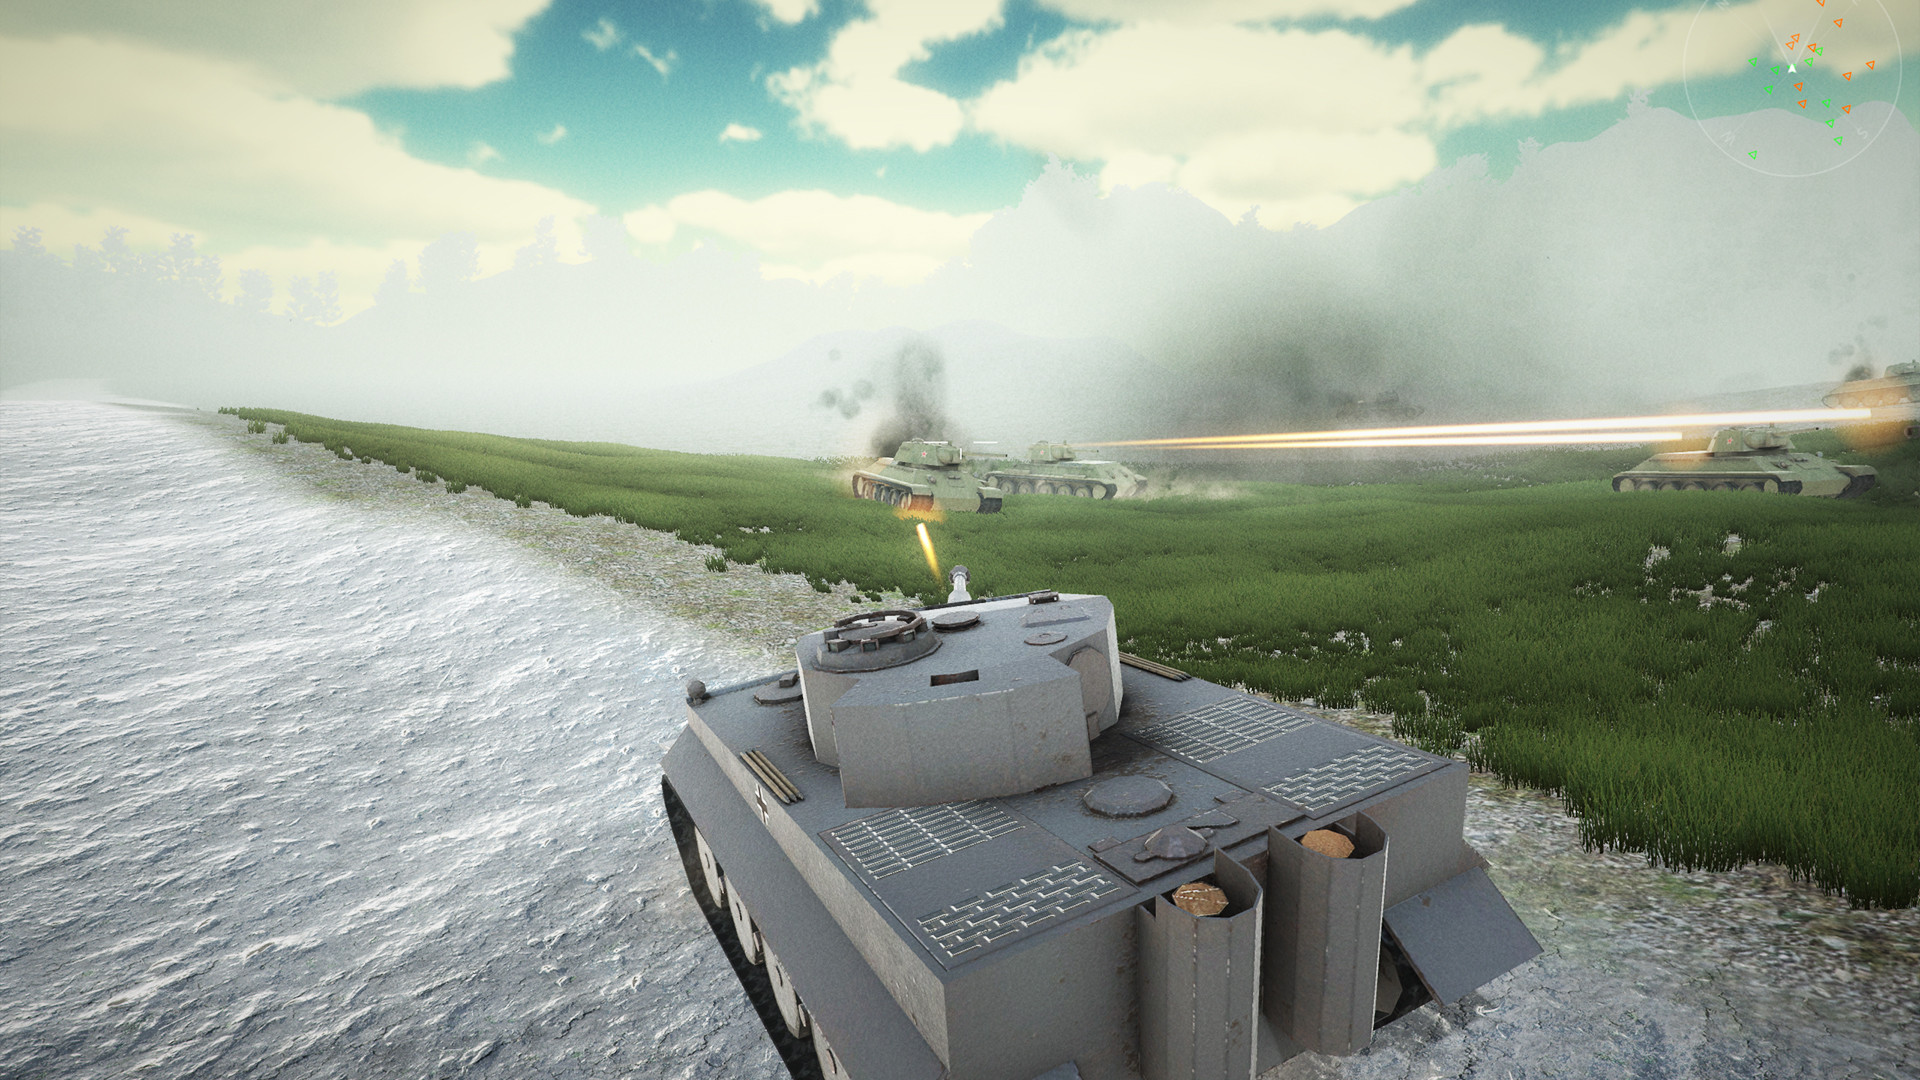 Tank Commander: Battlefield Steam CD Key